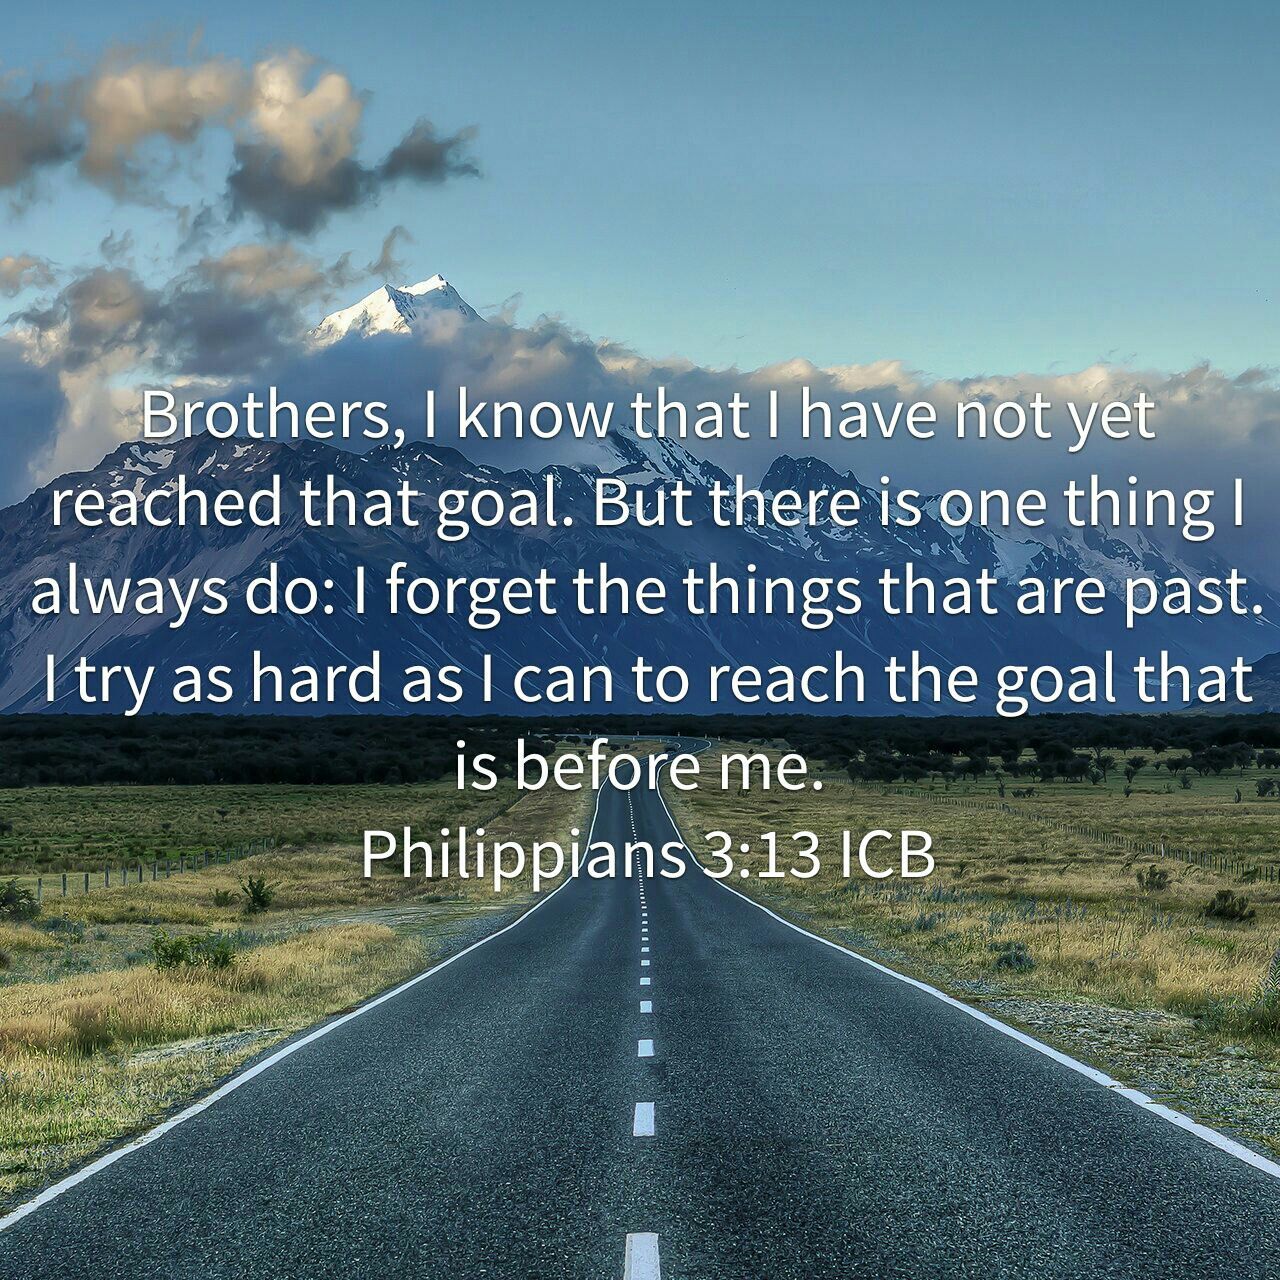 Philippians 3:13. Keep moving forward.